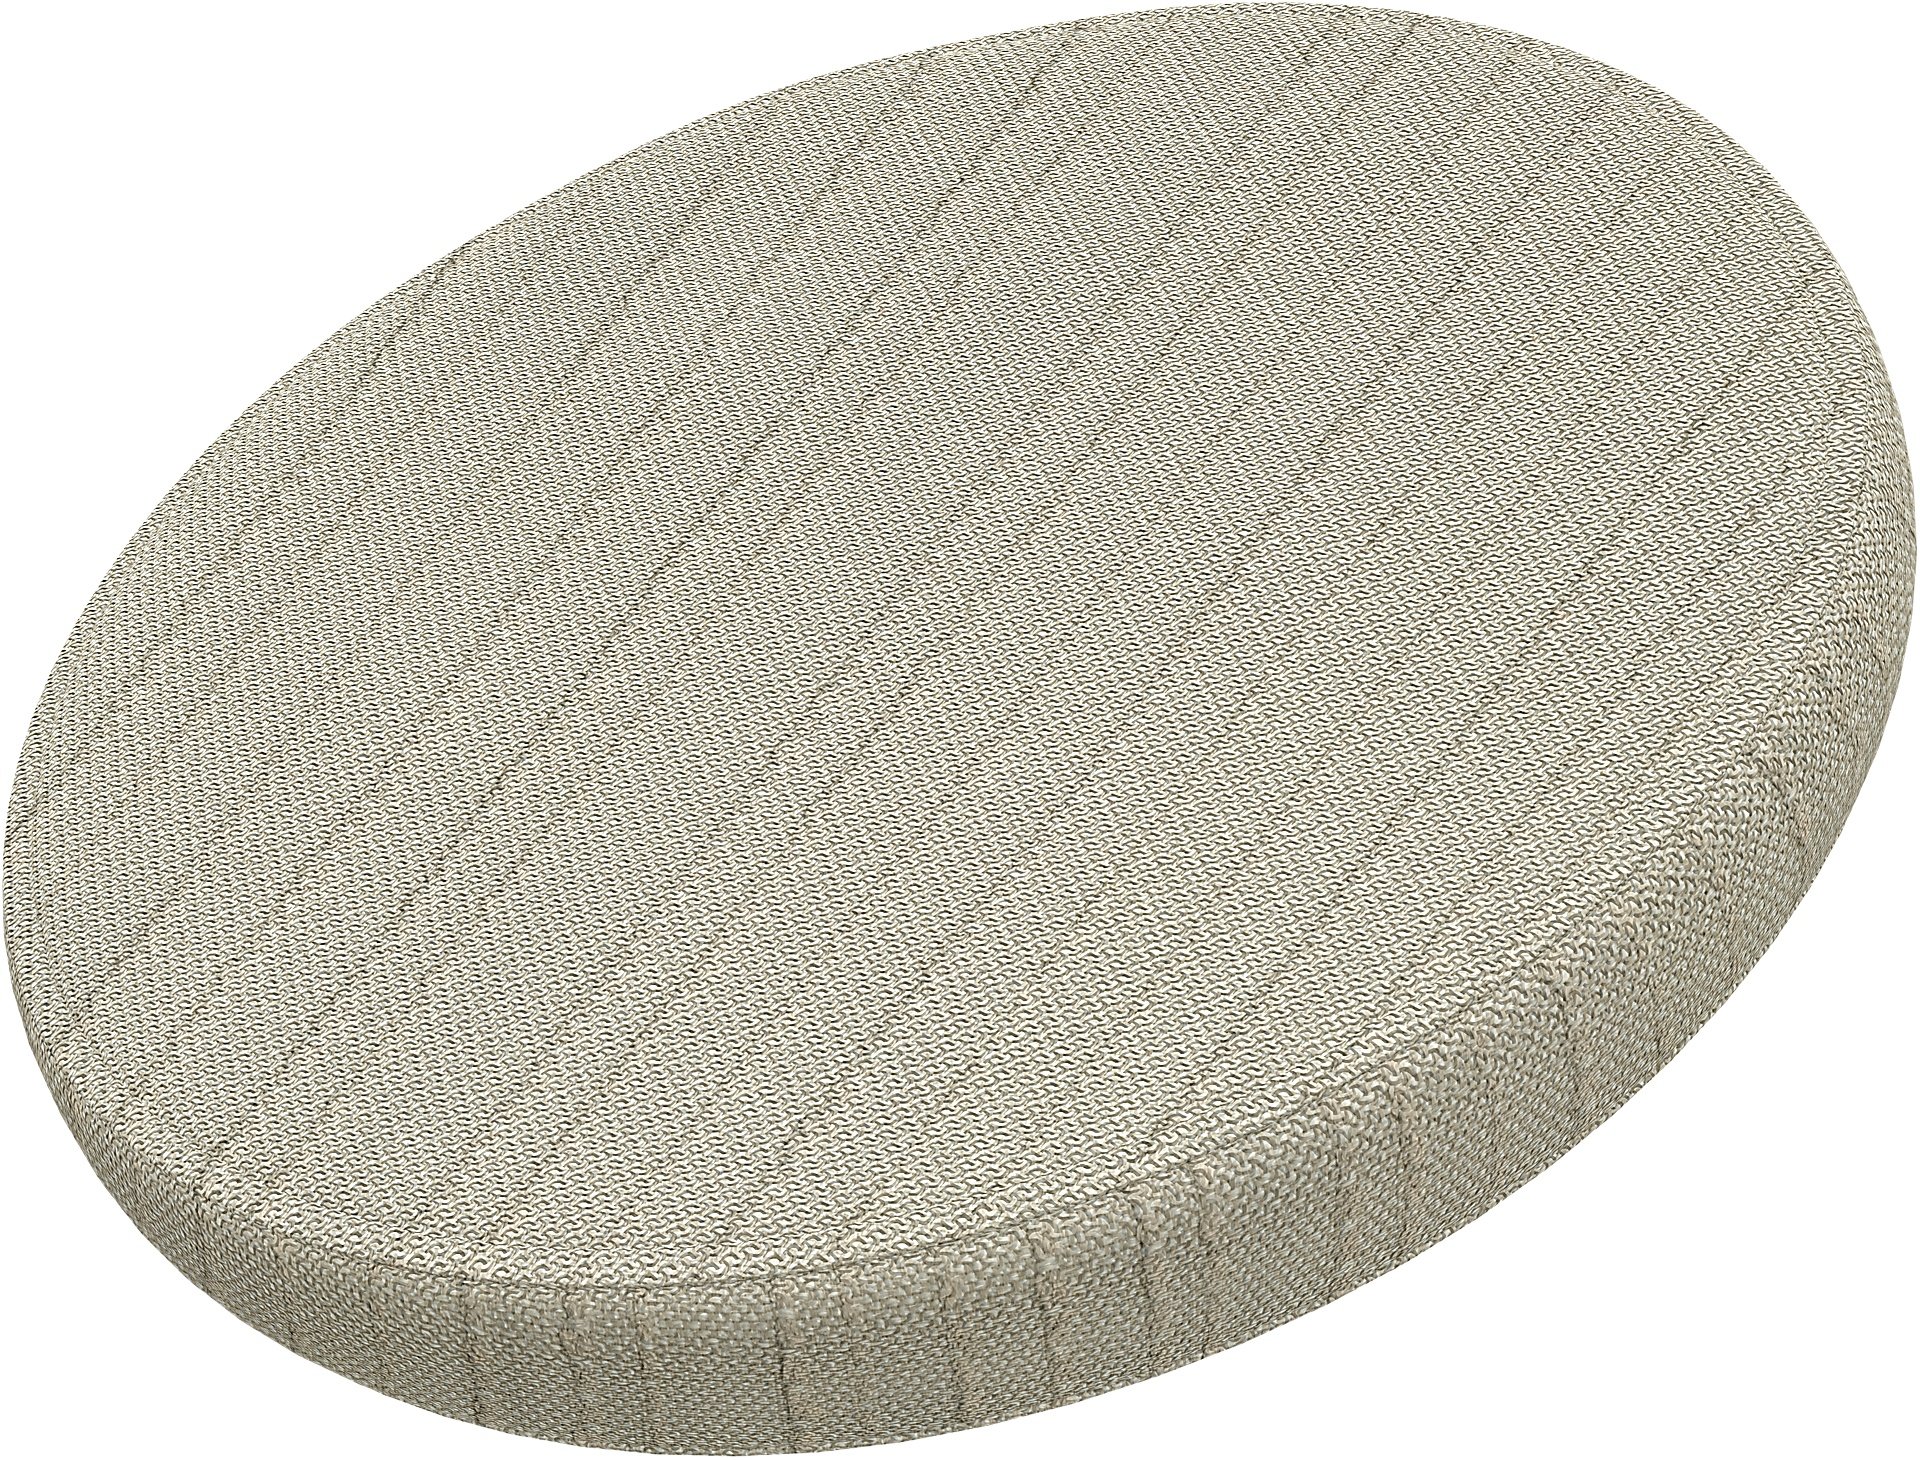 IKEA - Froson/Duvholmen Chair Seat Cushion Round Cover , Sand Beige, Outdoor - Bemz